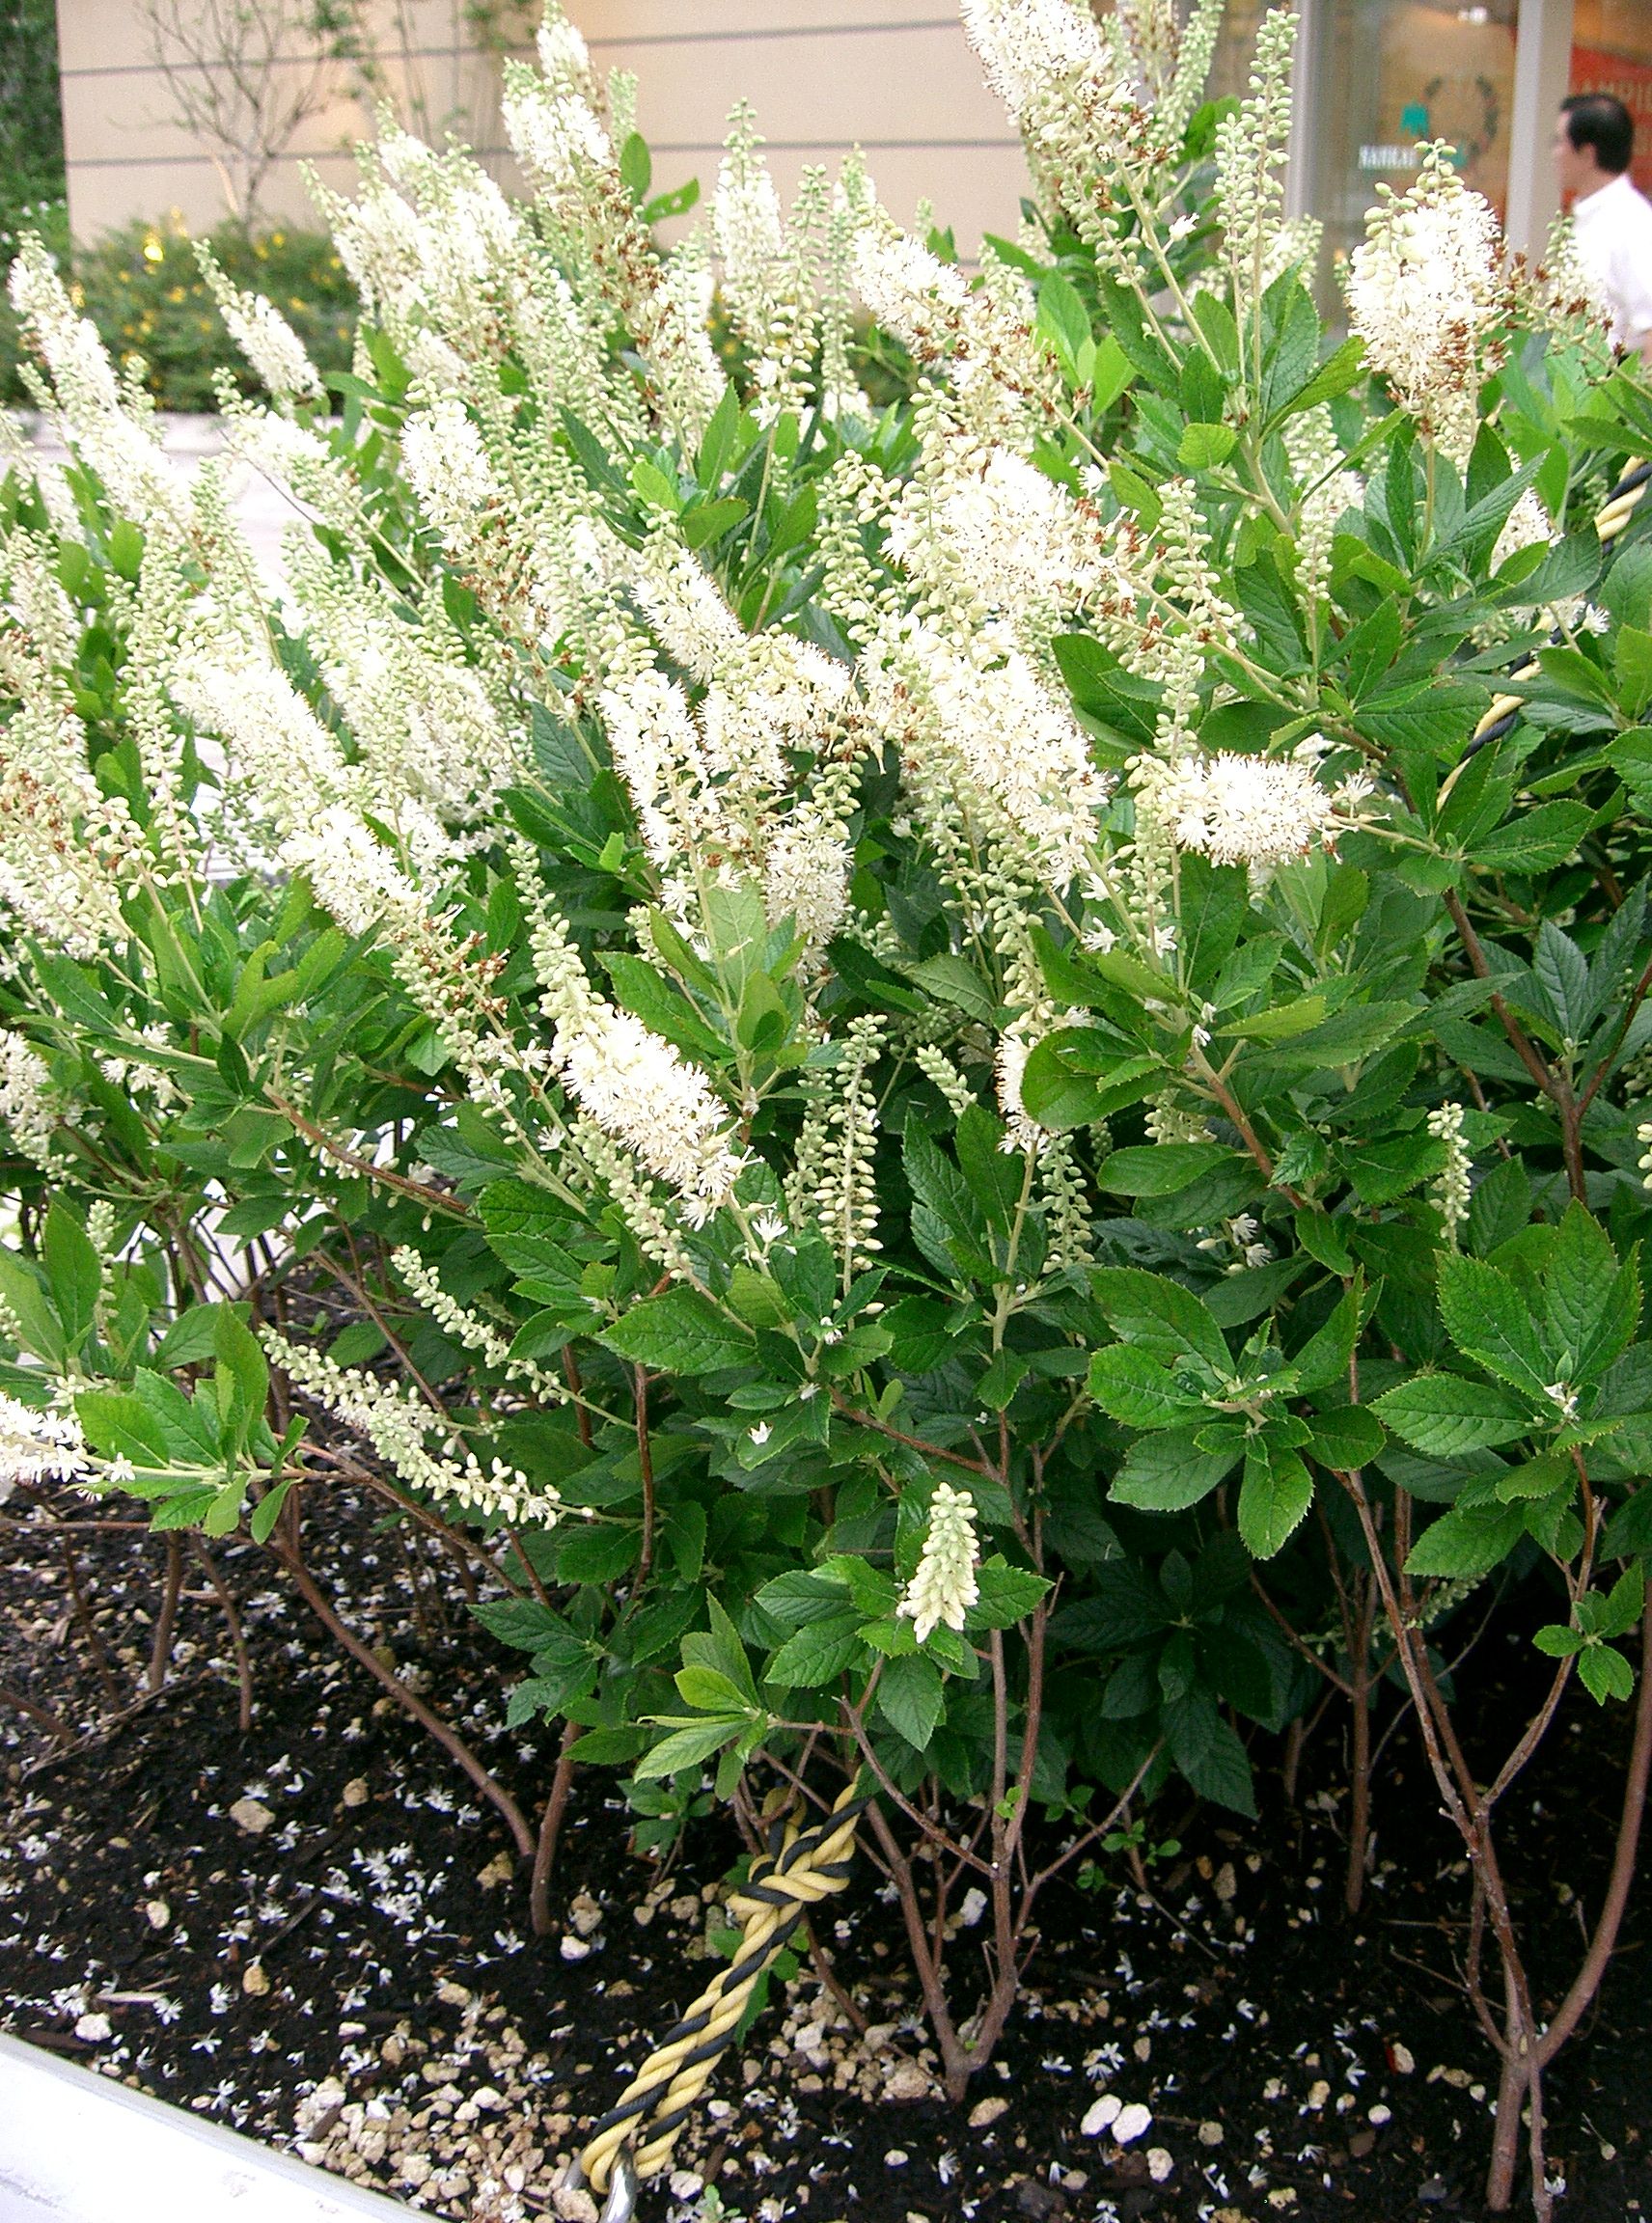 File:Clethra alnifolia1.jpg - Wikimedia Commons